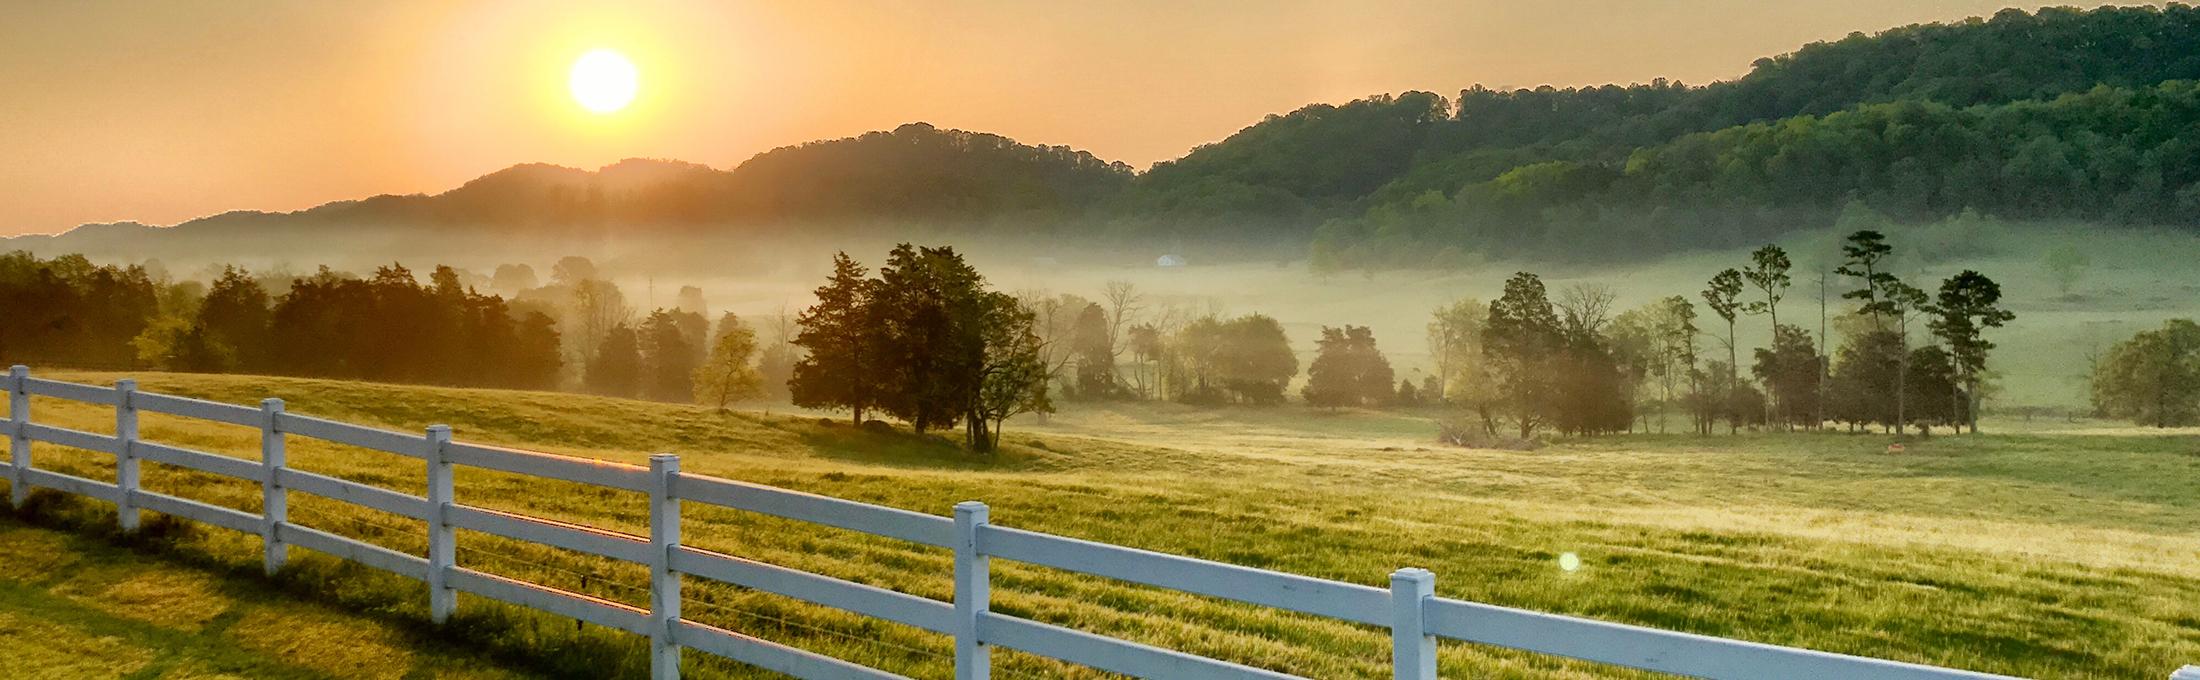 Tennessee insurance agent rural farm sunrise